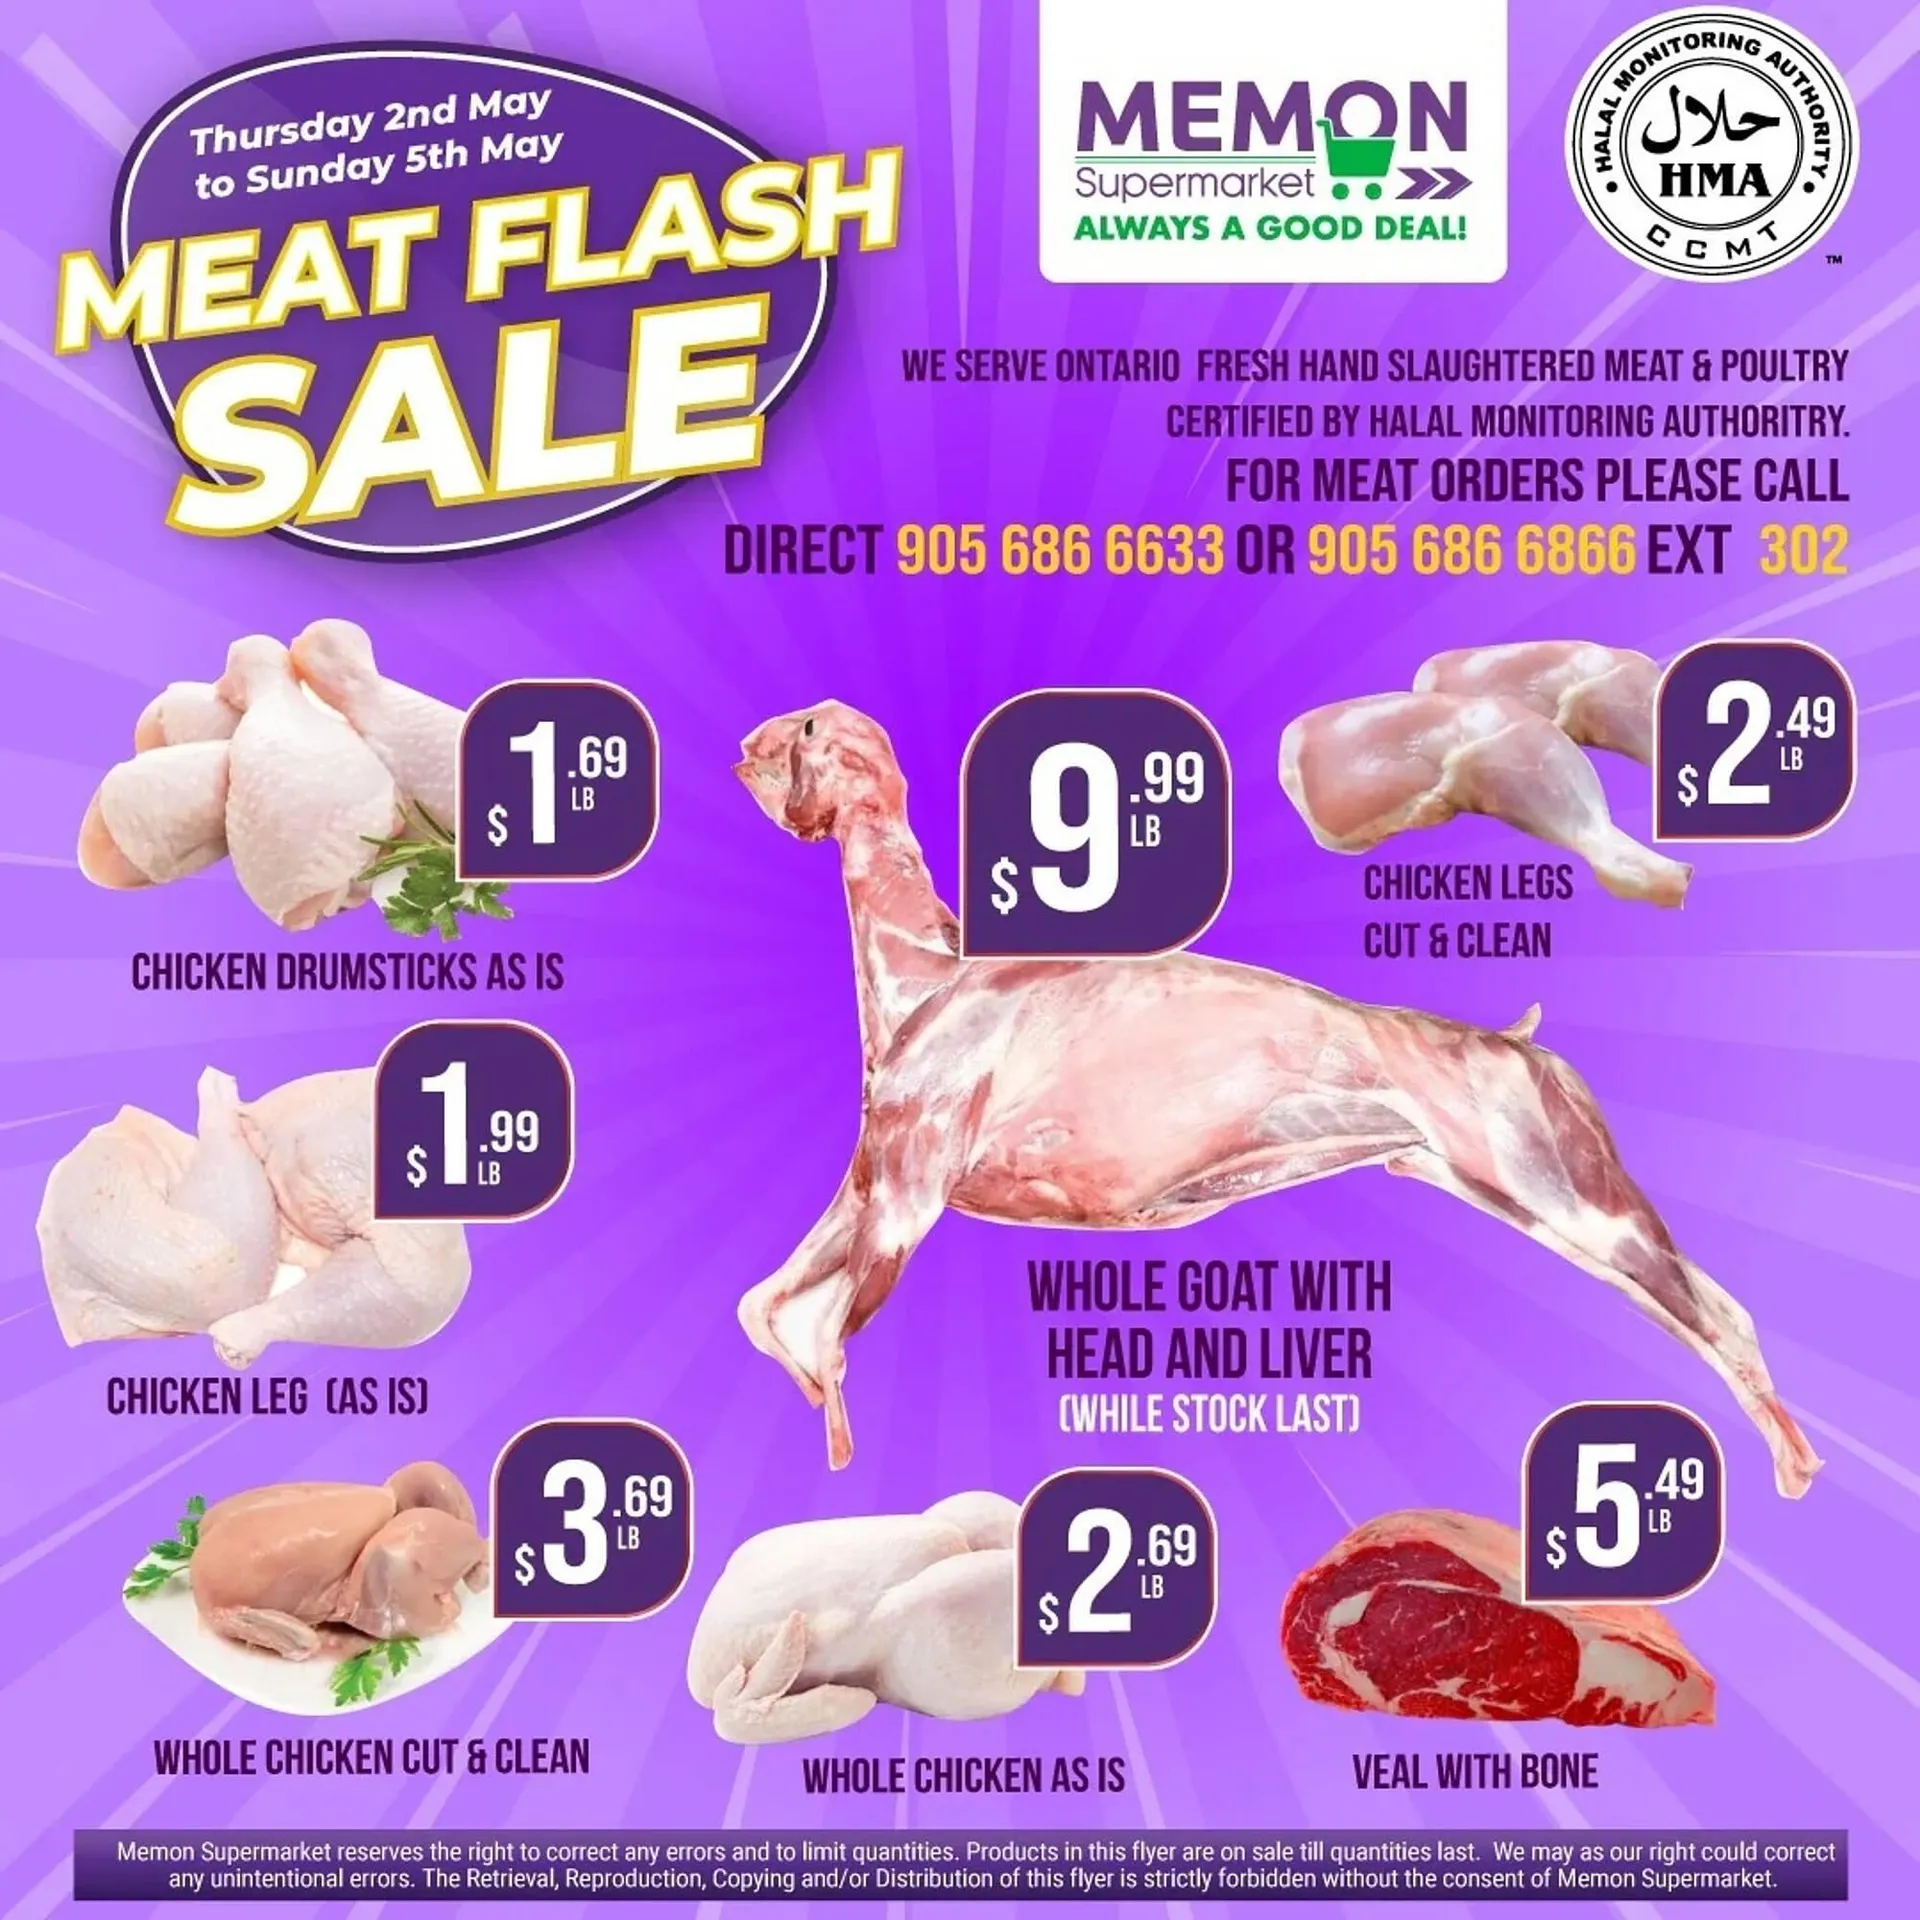 Memon Supermarket flyer - 1